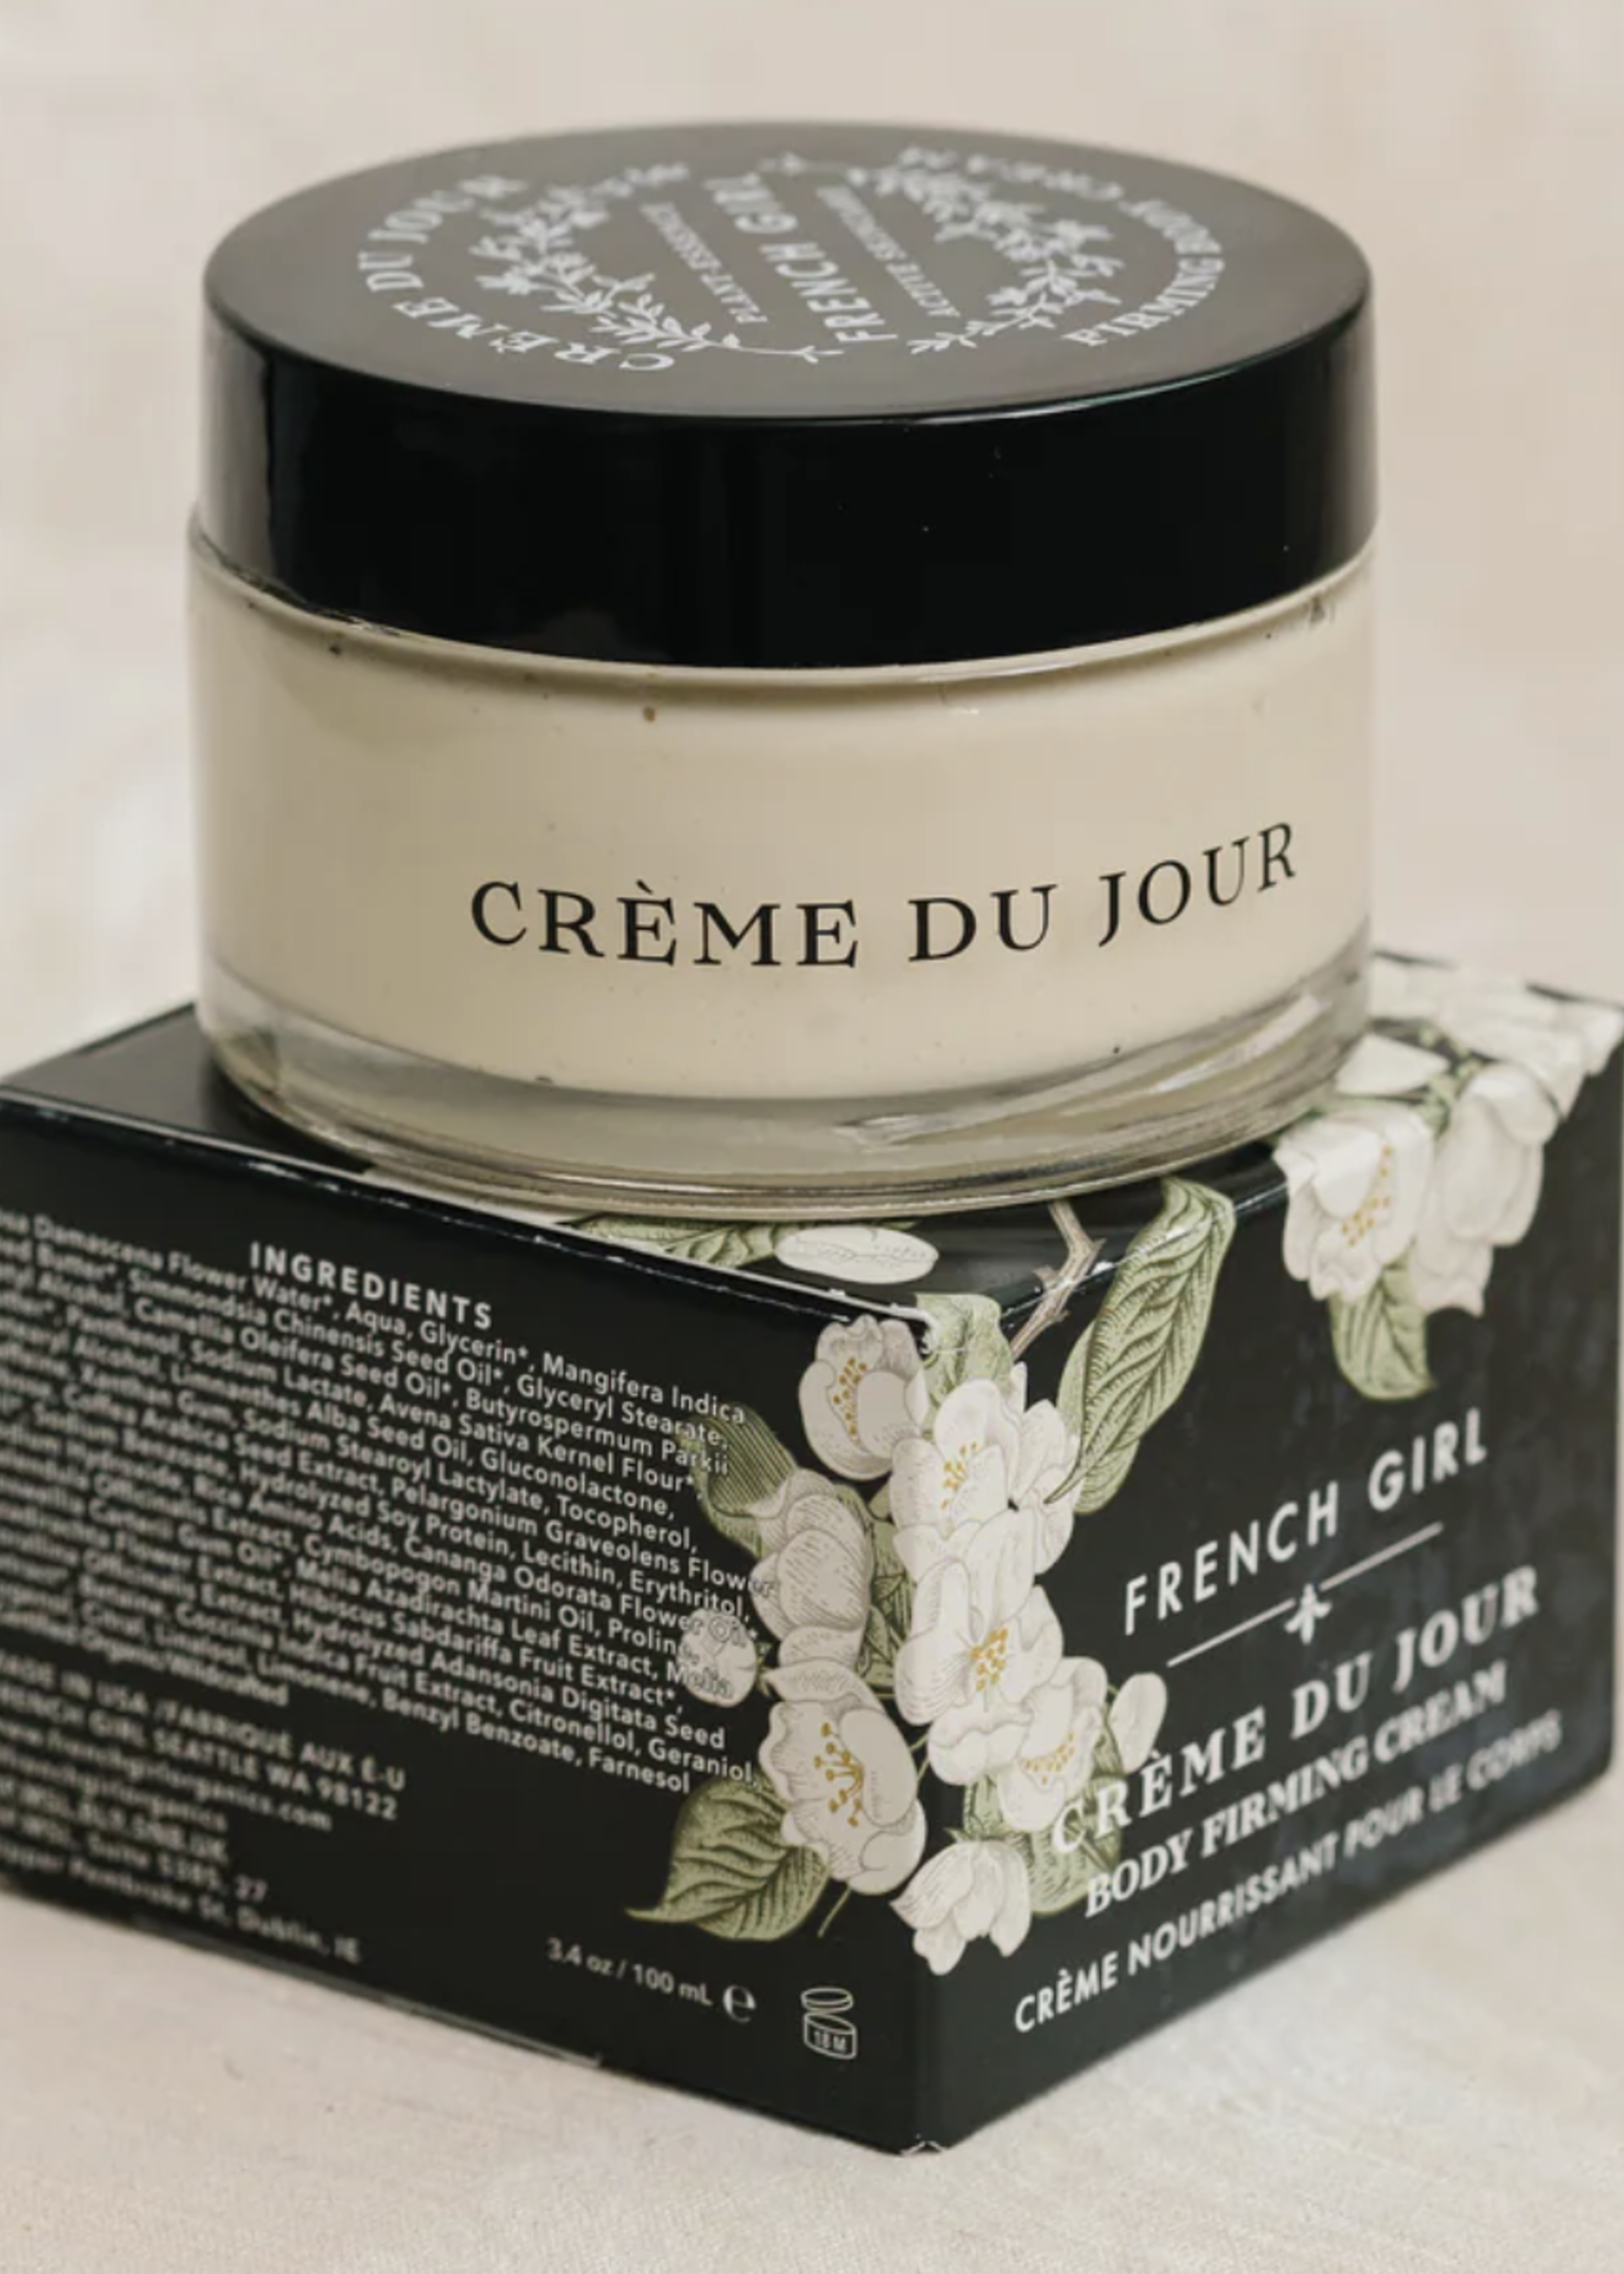 French Girl Creme du Jour Firming Body Cream